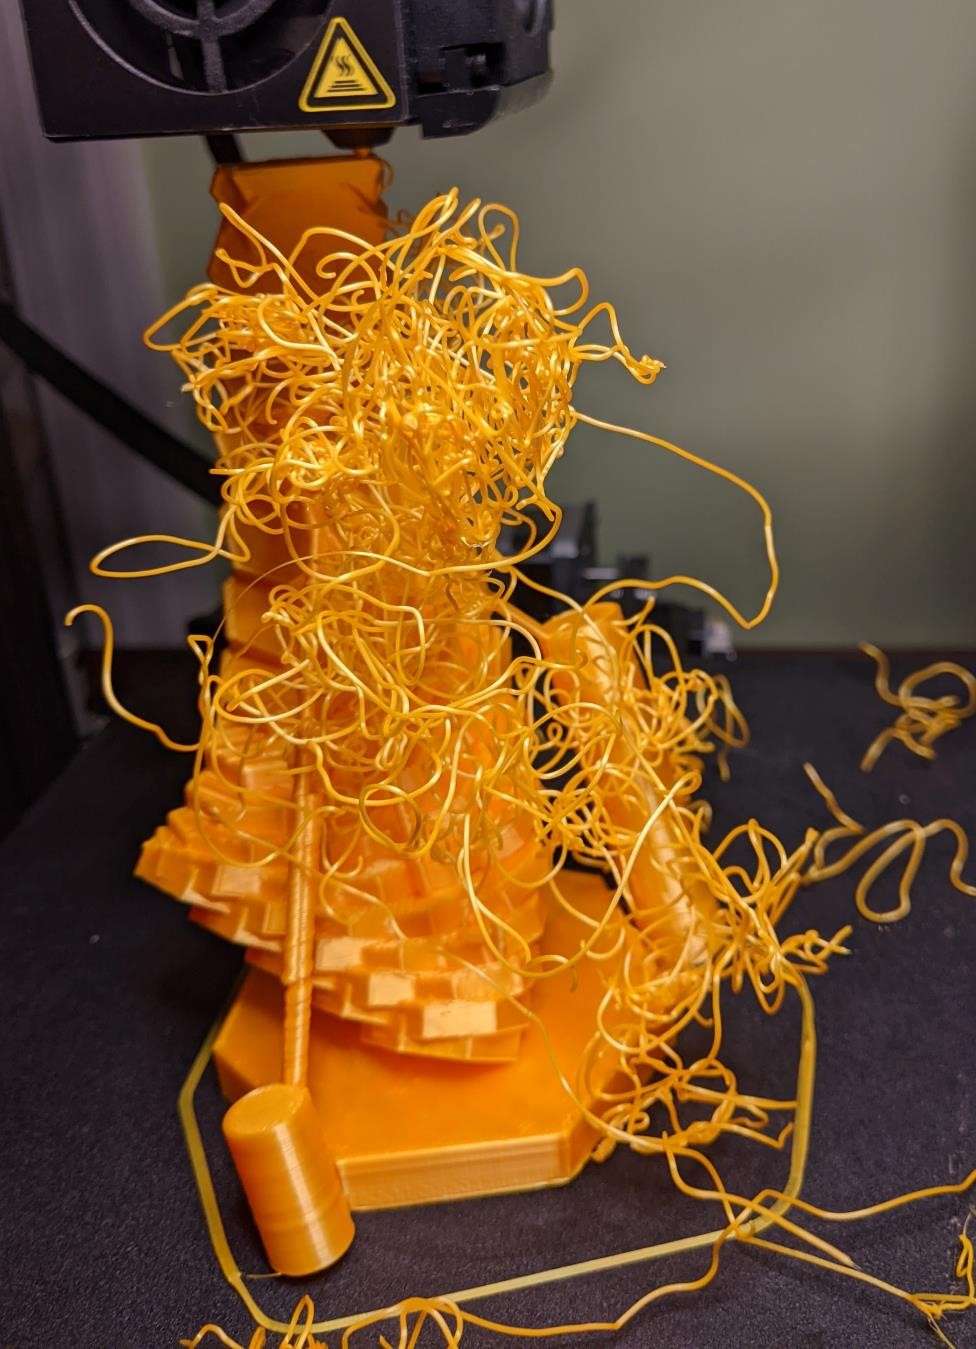 Wave Torture Test Print Spaghetti